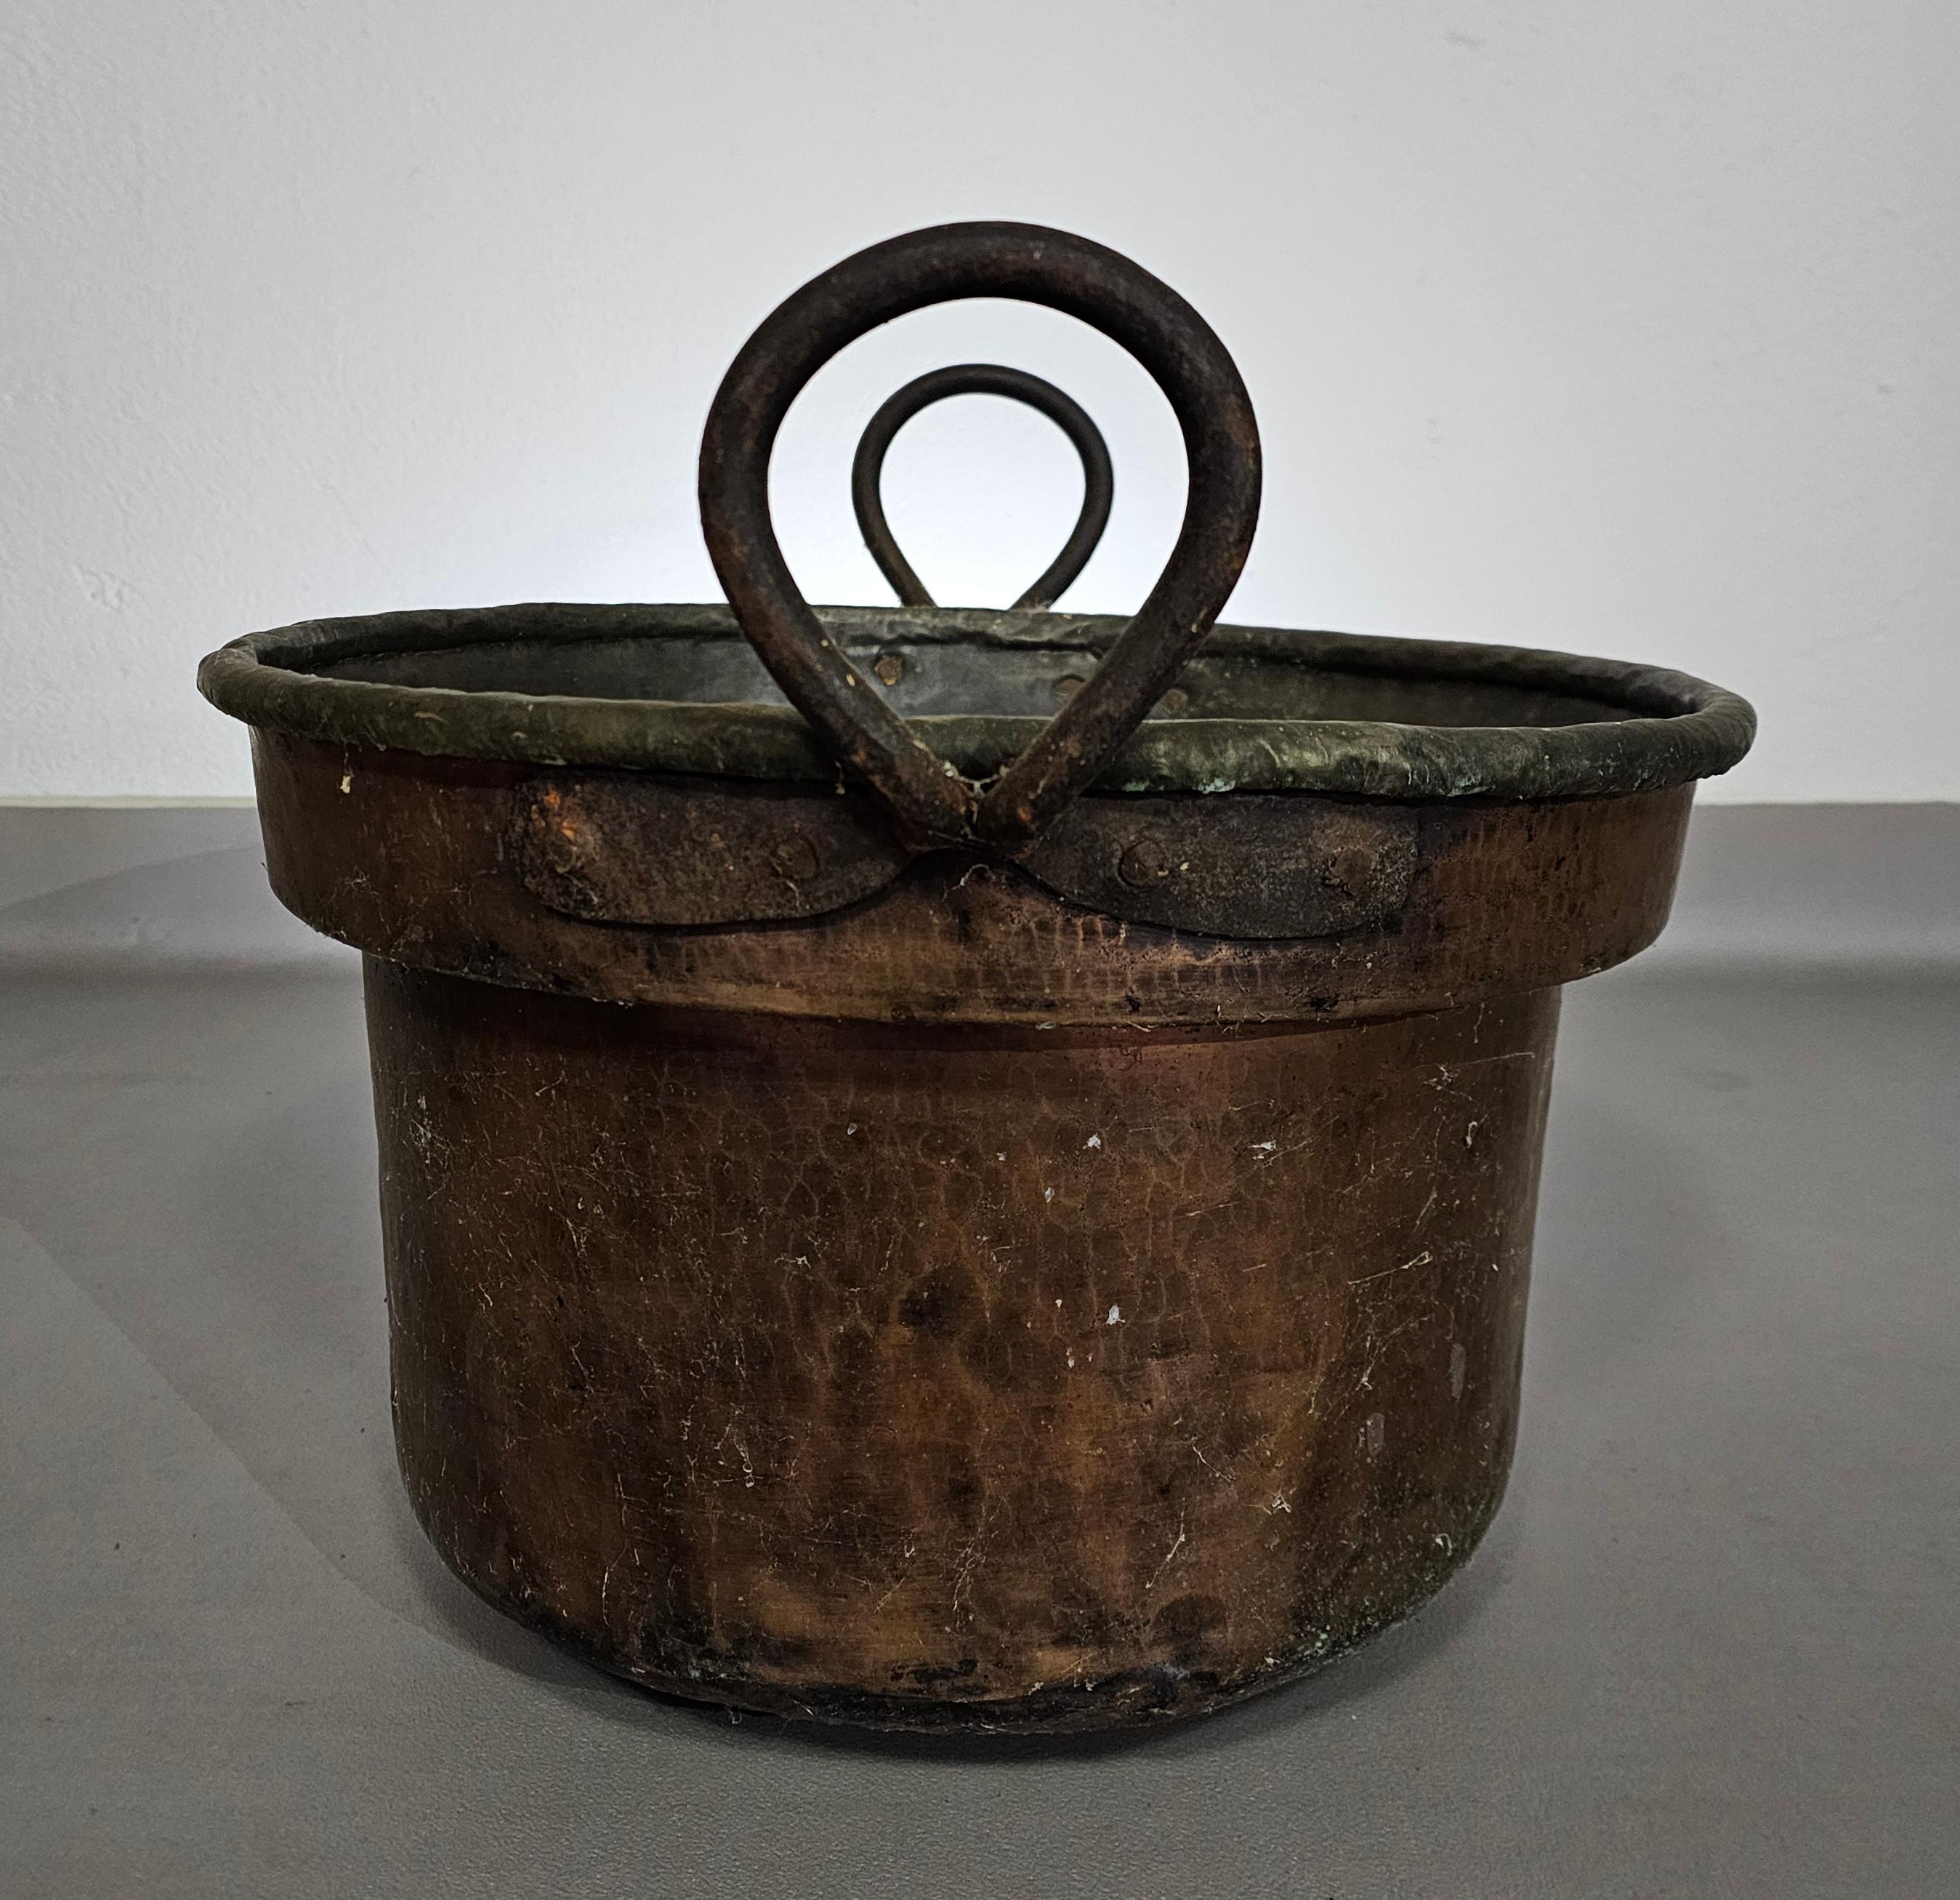  Dutch / Handled Fireplace - Copper / Brass - Bucket  For Sale 1